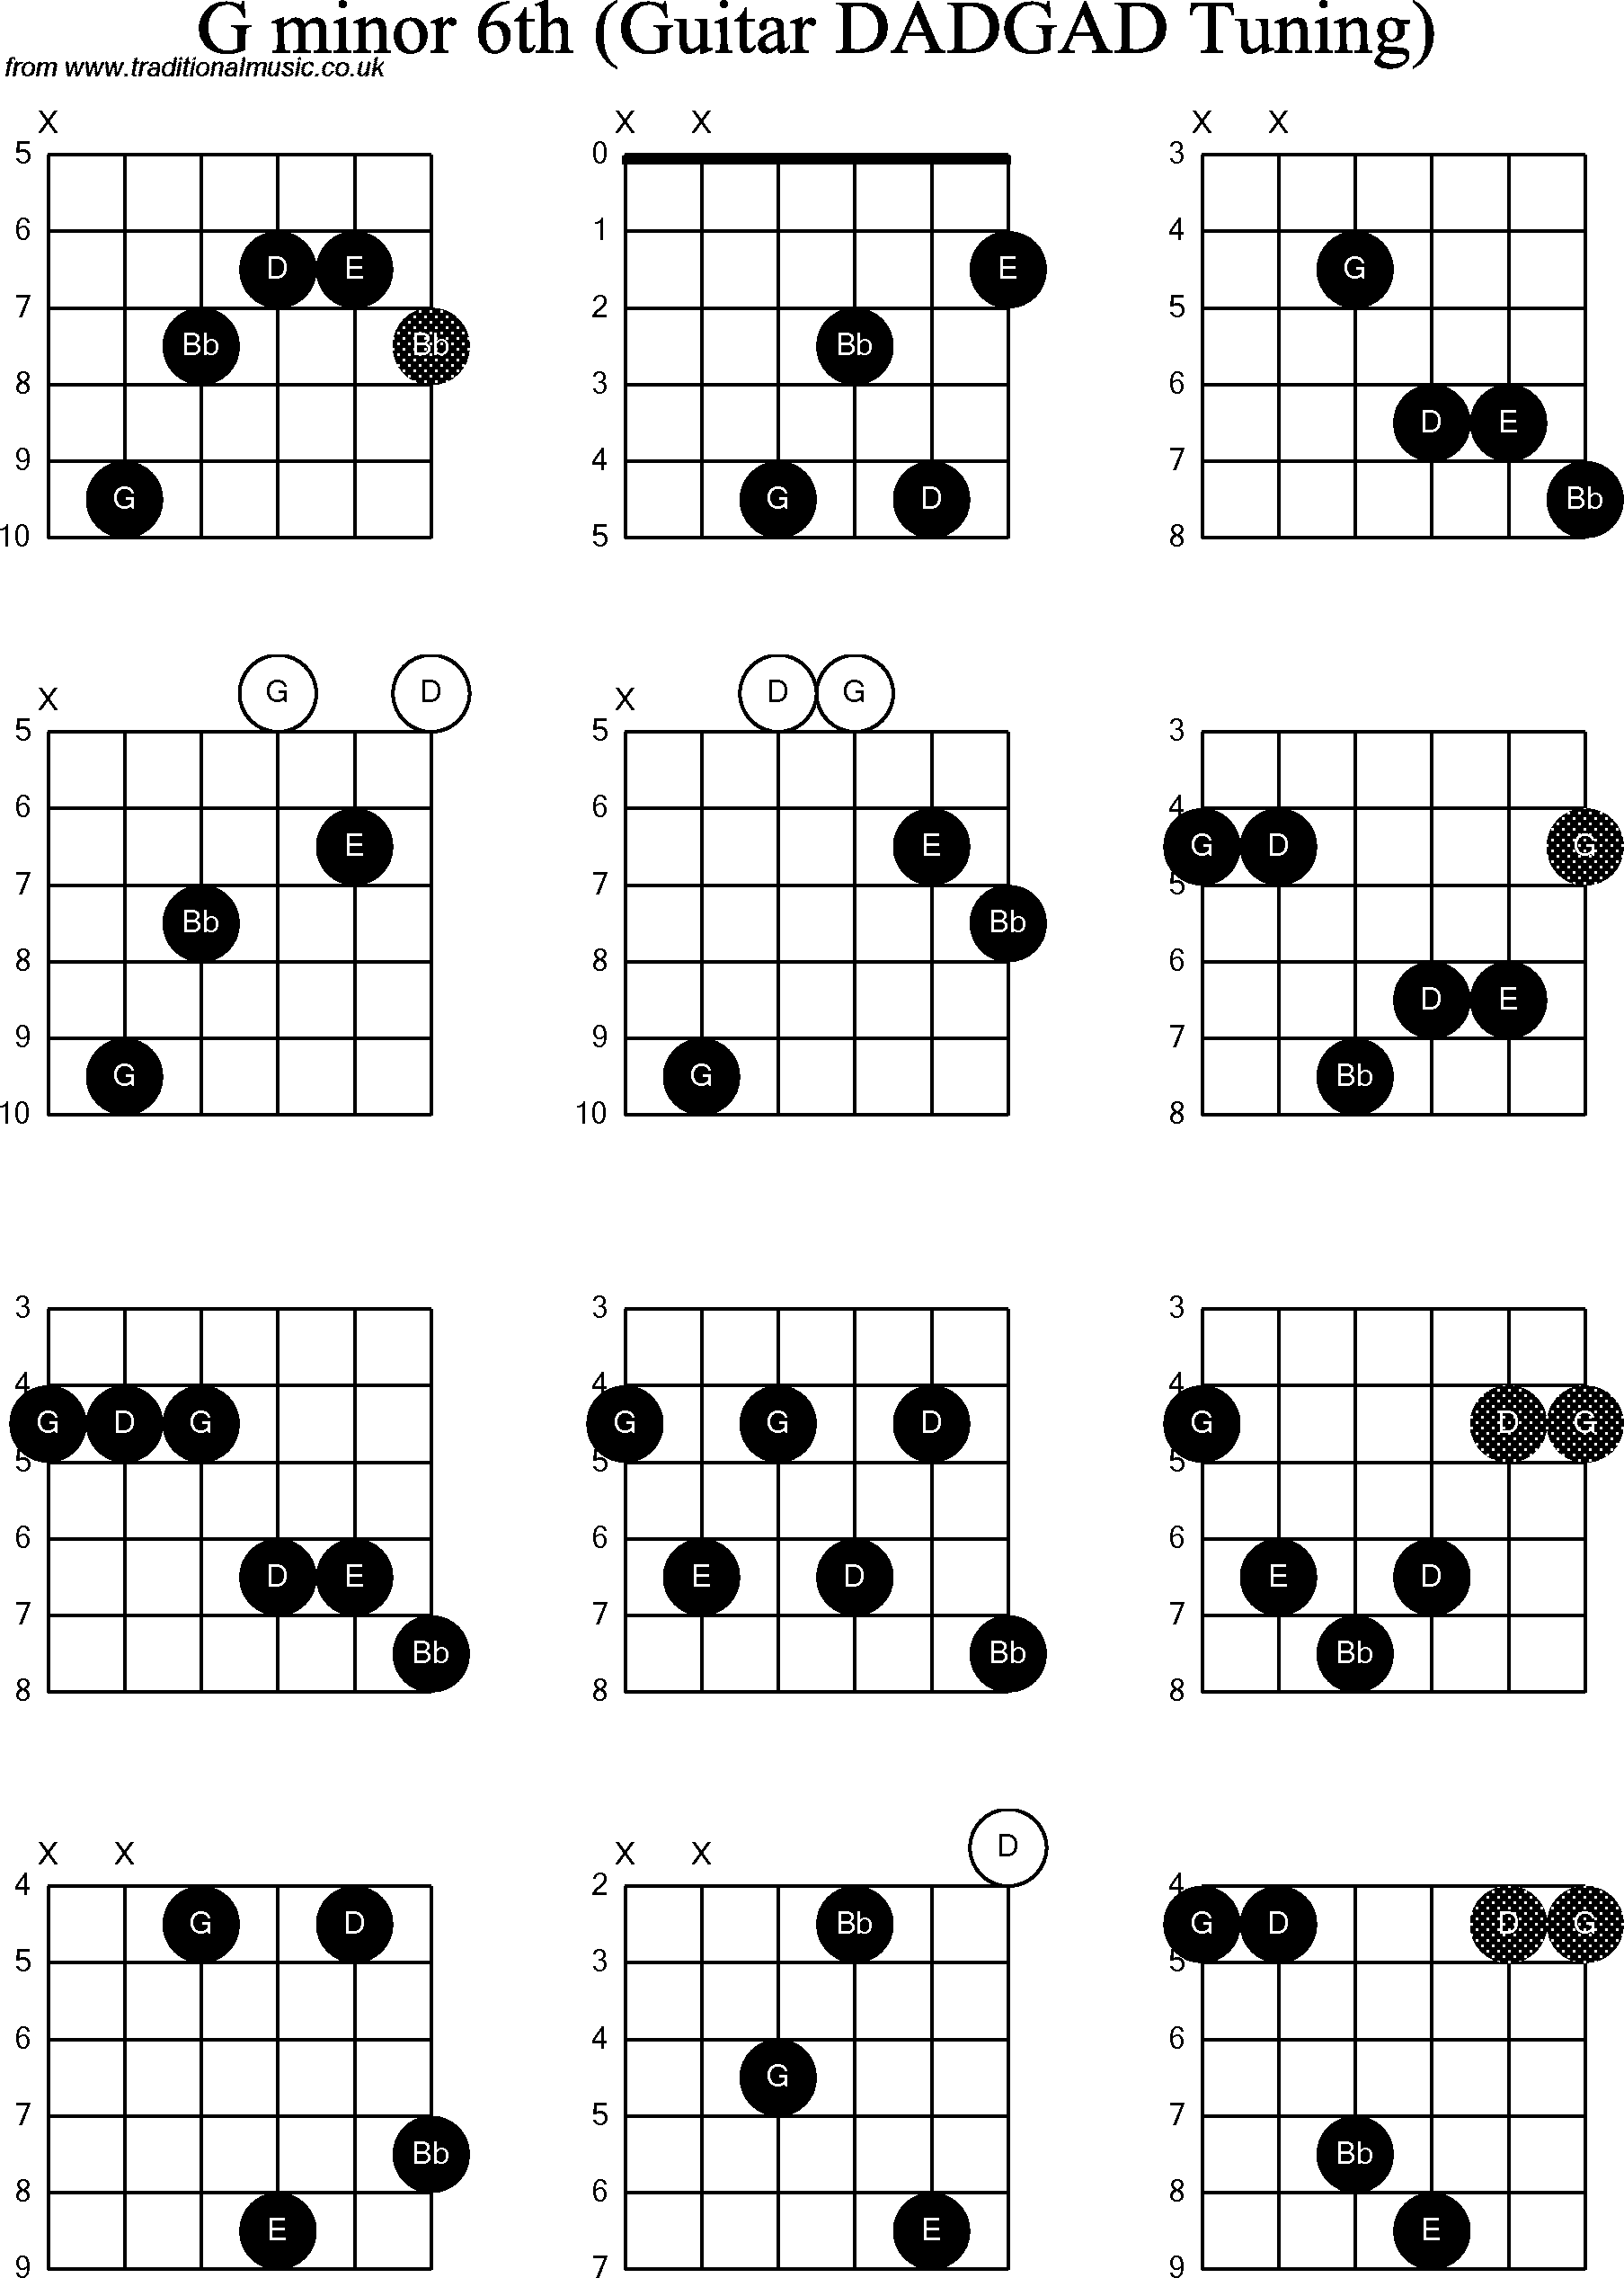 Chord Diagrams for D Modal Guitar(DADGAD), G Minor6th